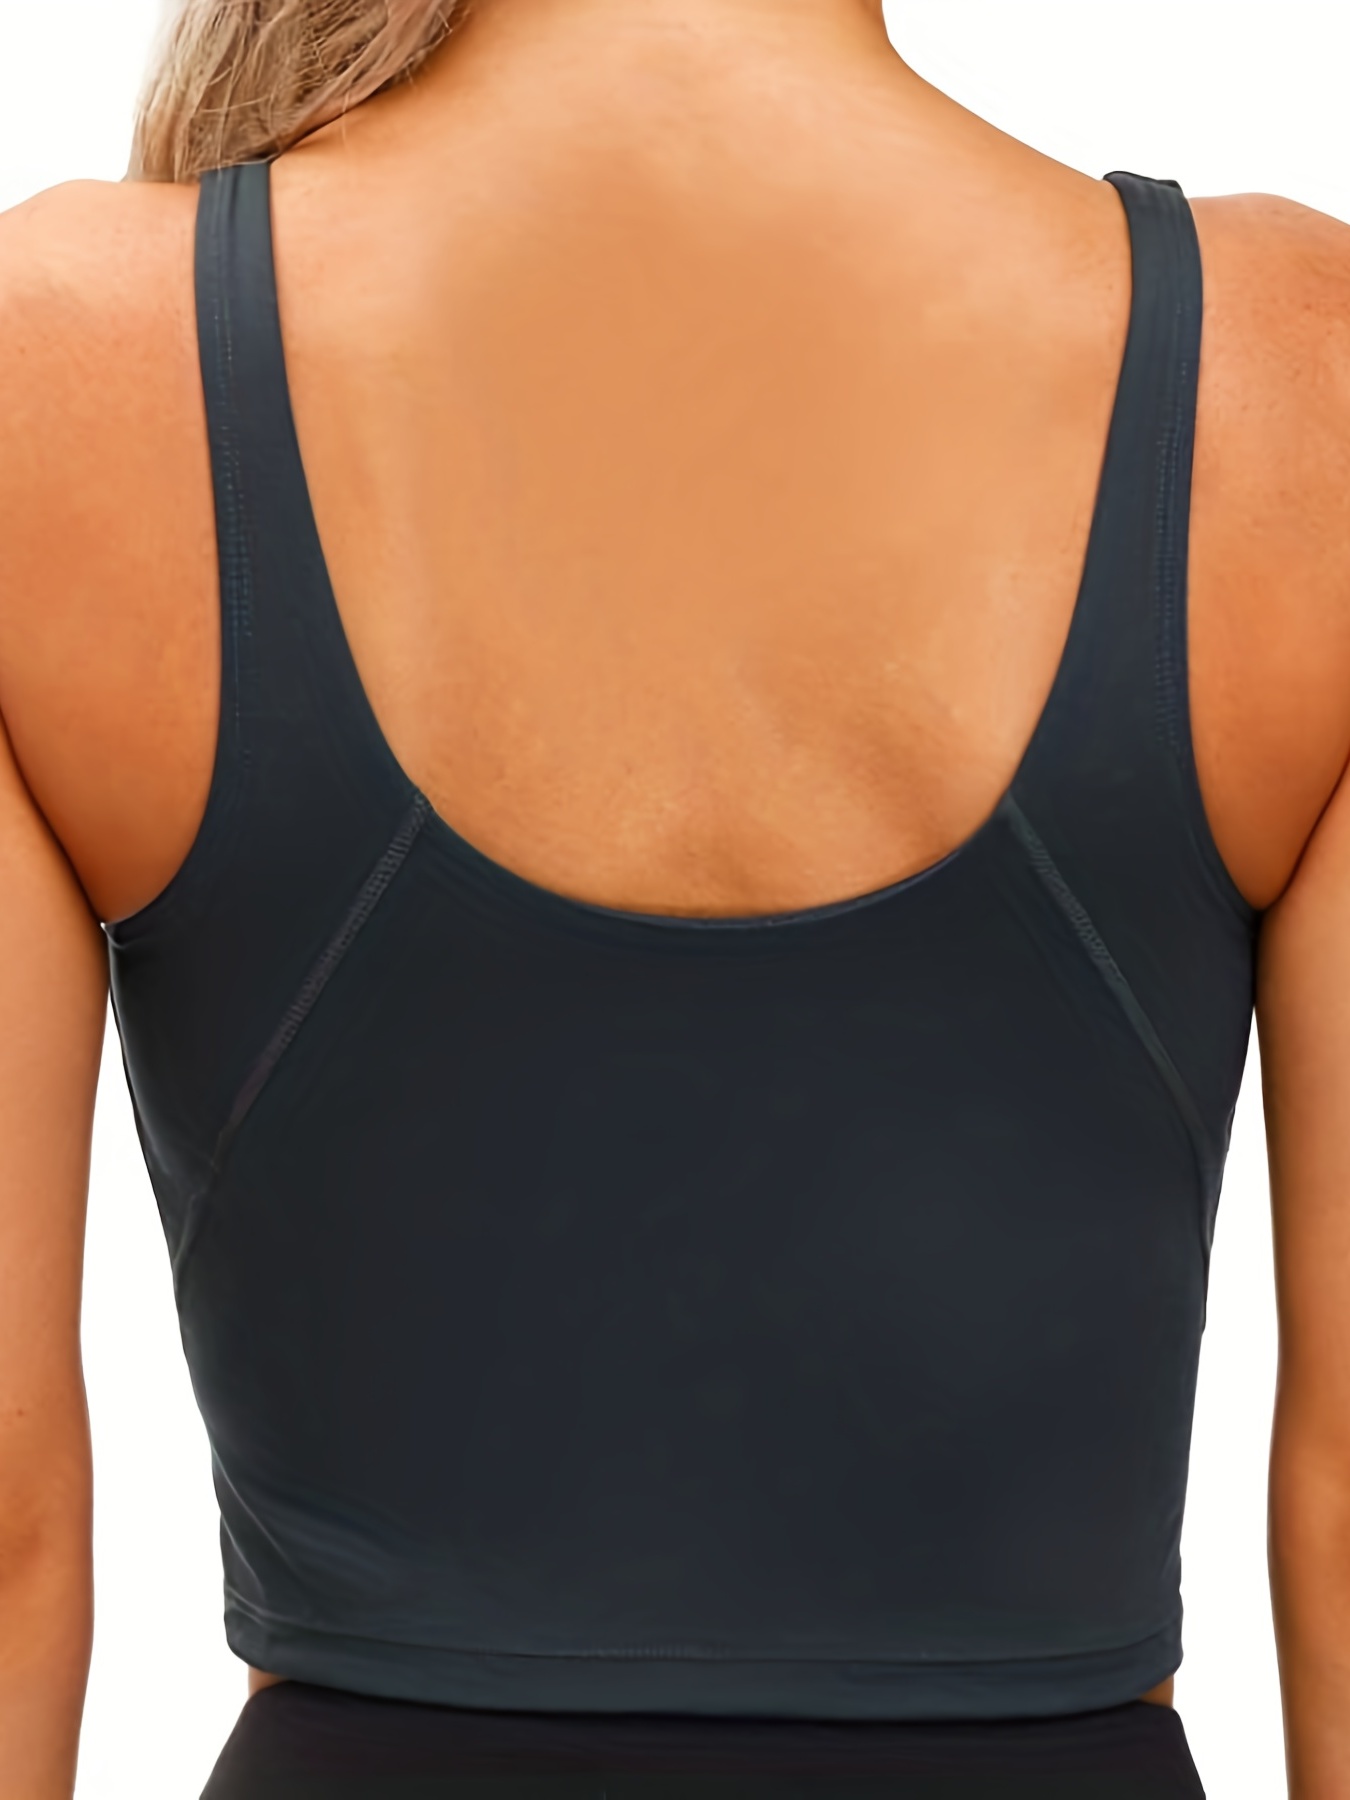 Cathalem Longline Sports Bras For Women Longline Padded Medium Support  Workout Crop Tops Built in Shelf Bra Wirefree Gym Yoga Tank Top,Black L 